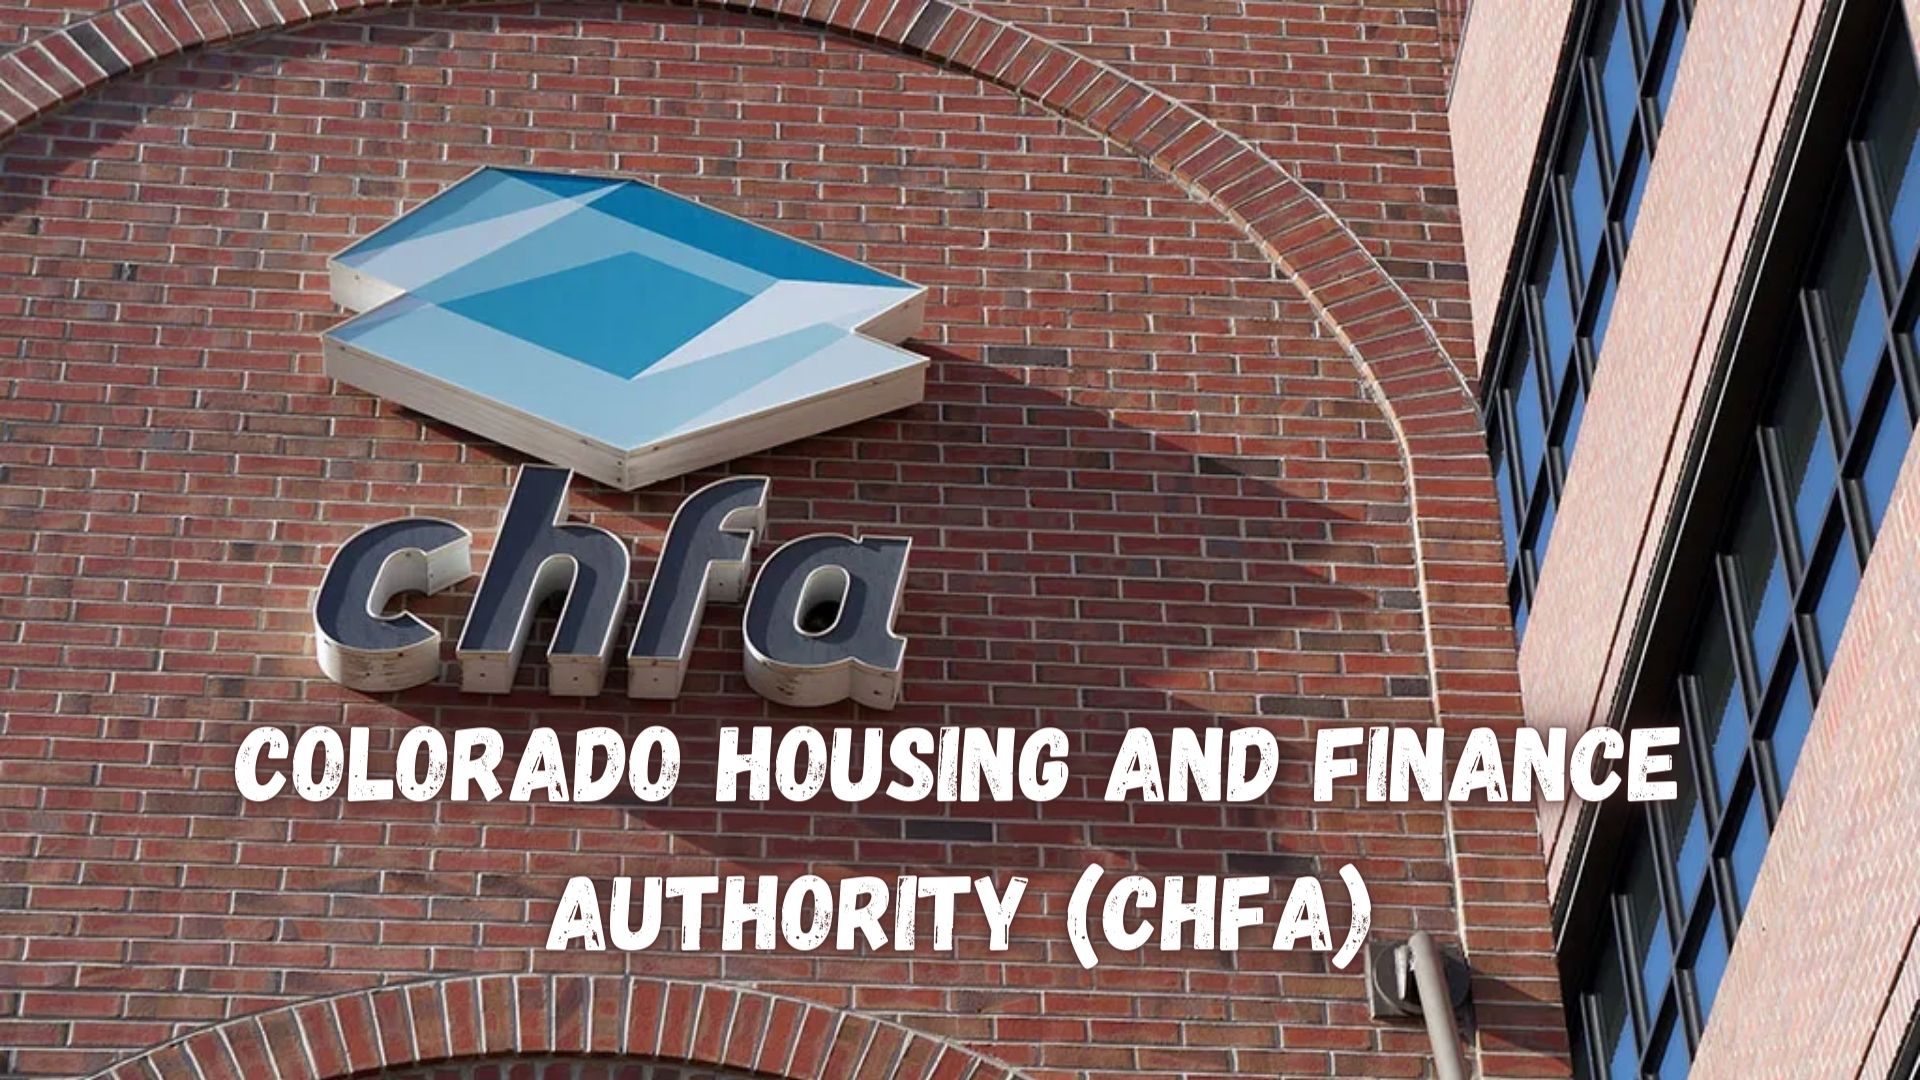 Colorado Housing and Finance Authority (CHFA).